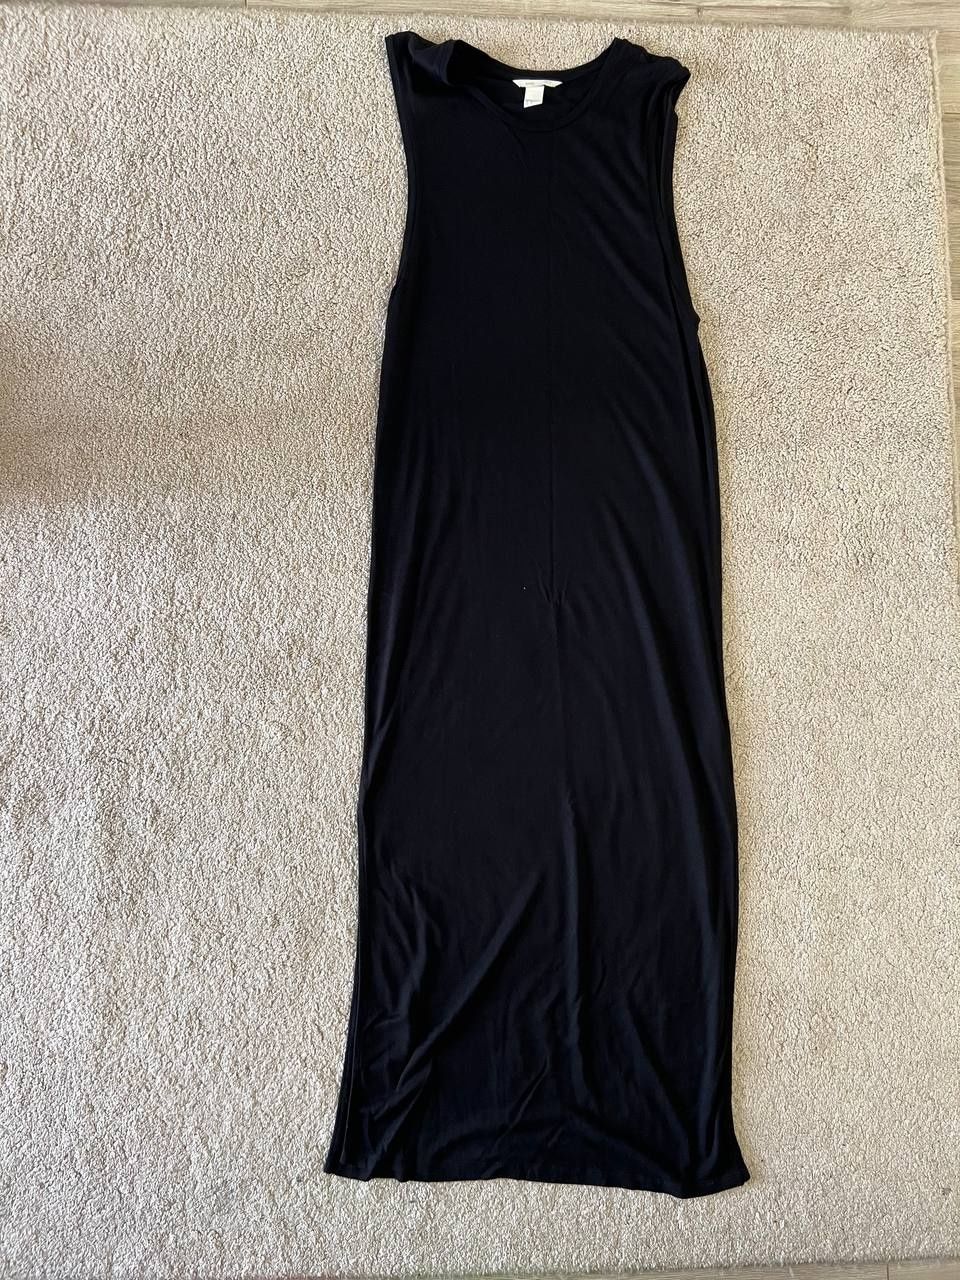 Платье H&M. Трикотажное, длина ниже икр. 50.000